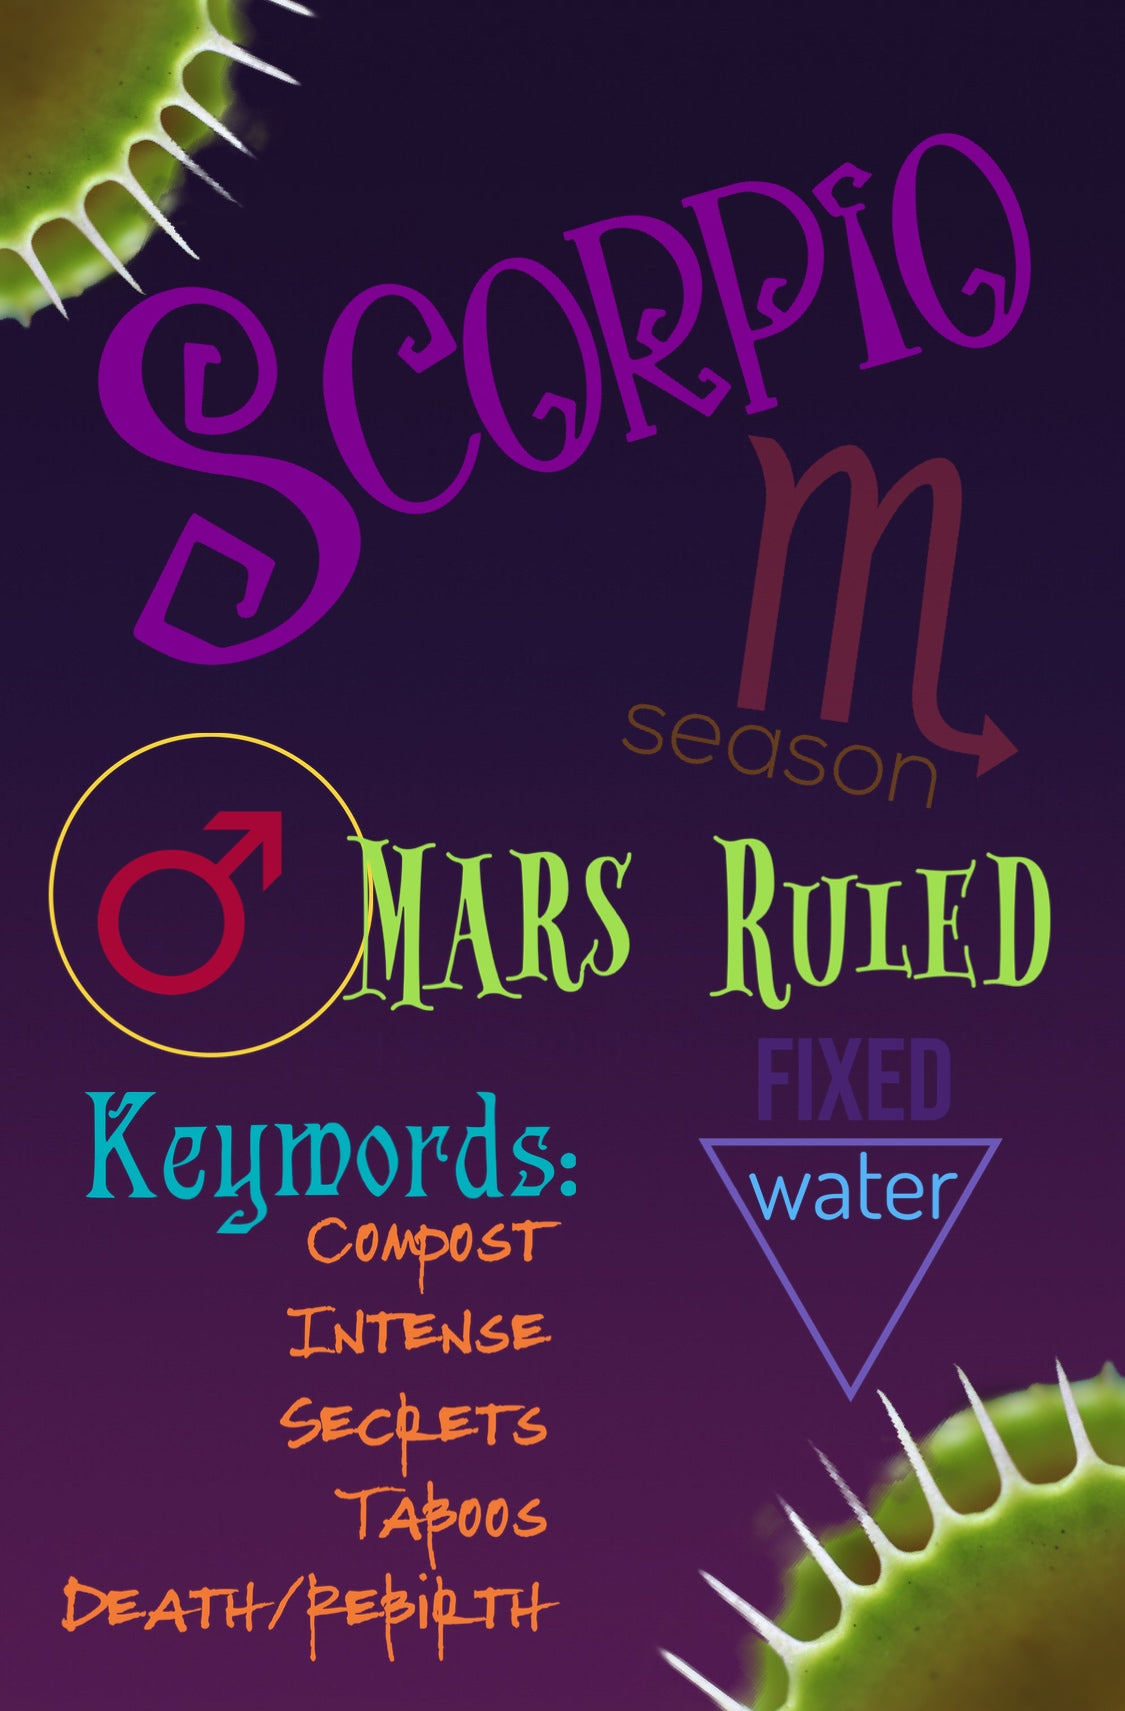 Rave Astrology: Scorpio Szn